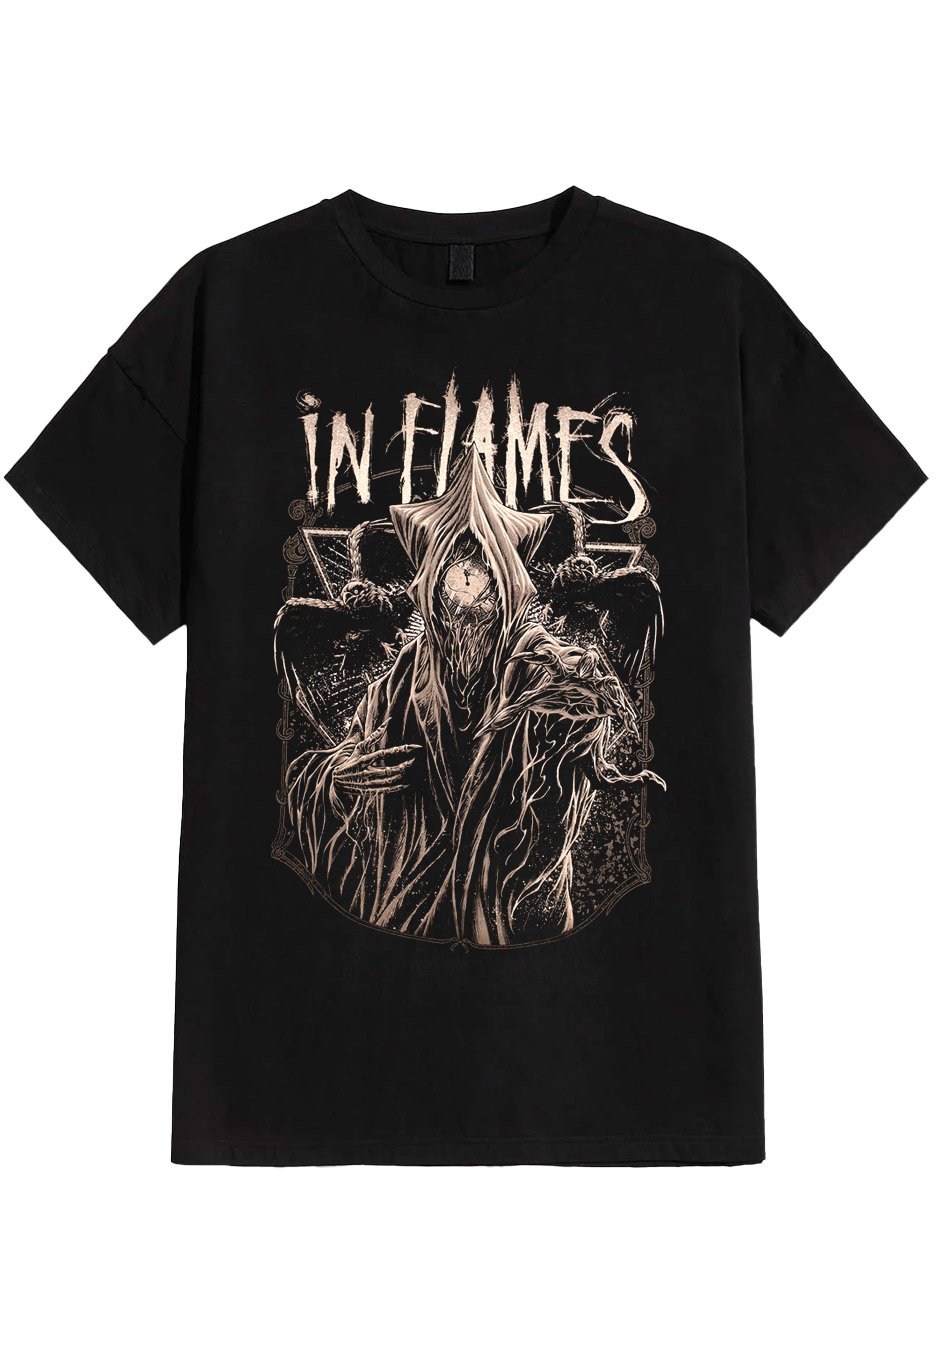 In Flames - Take Away My Pain - T-Shirt